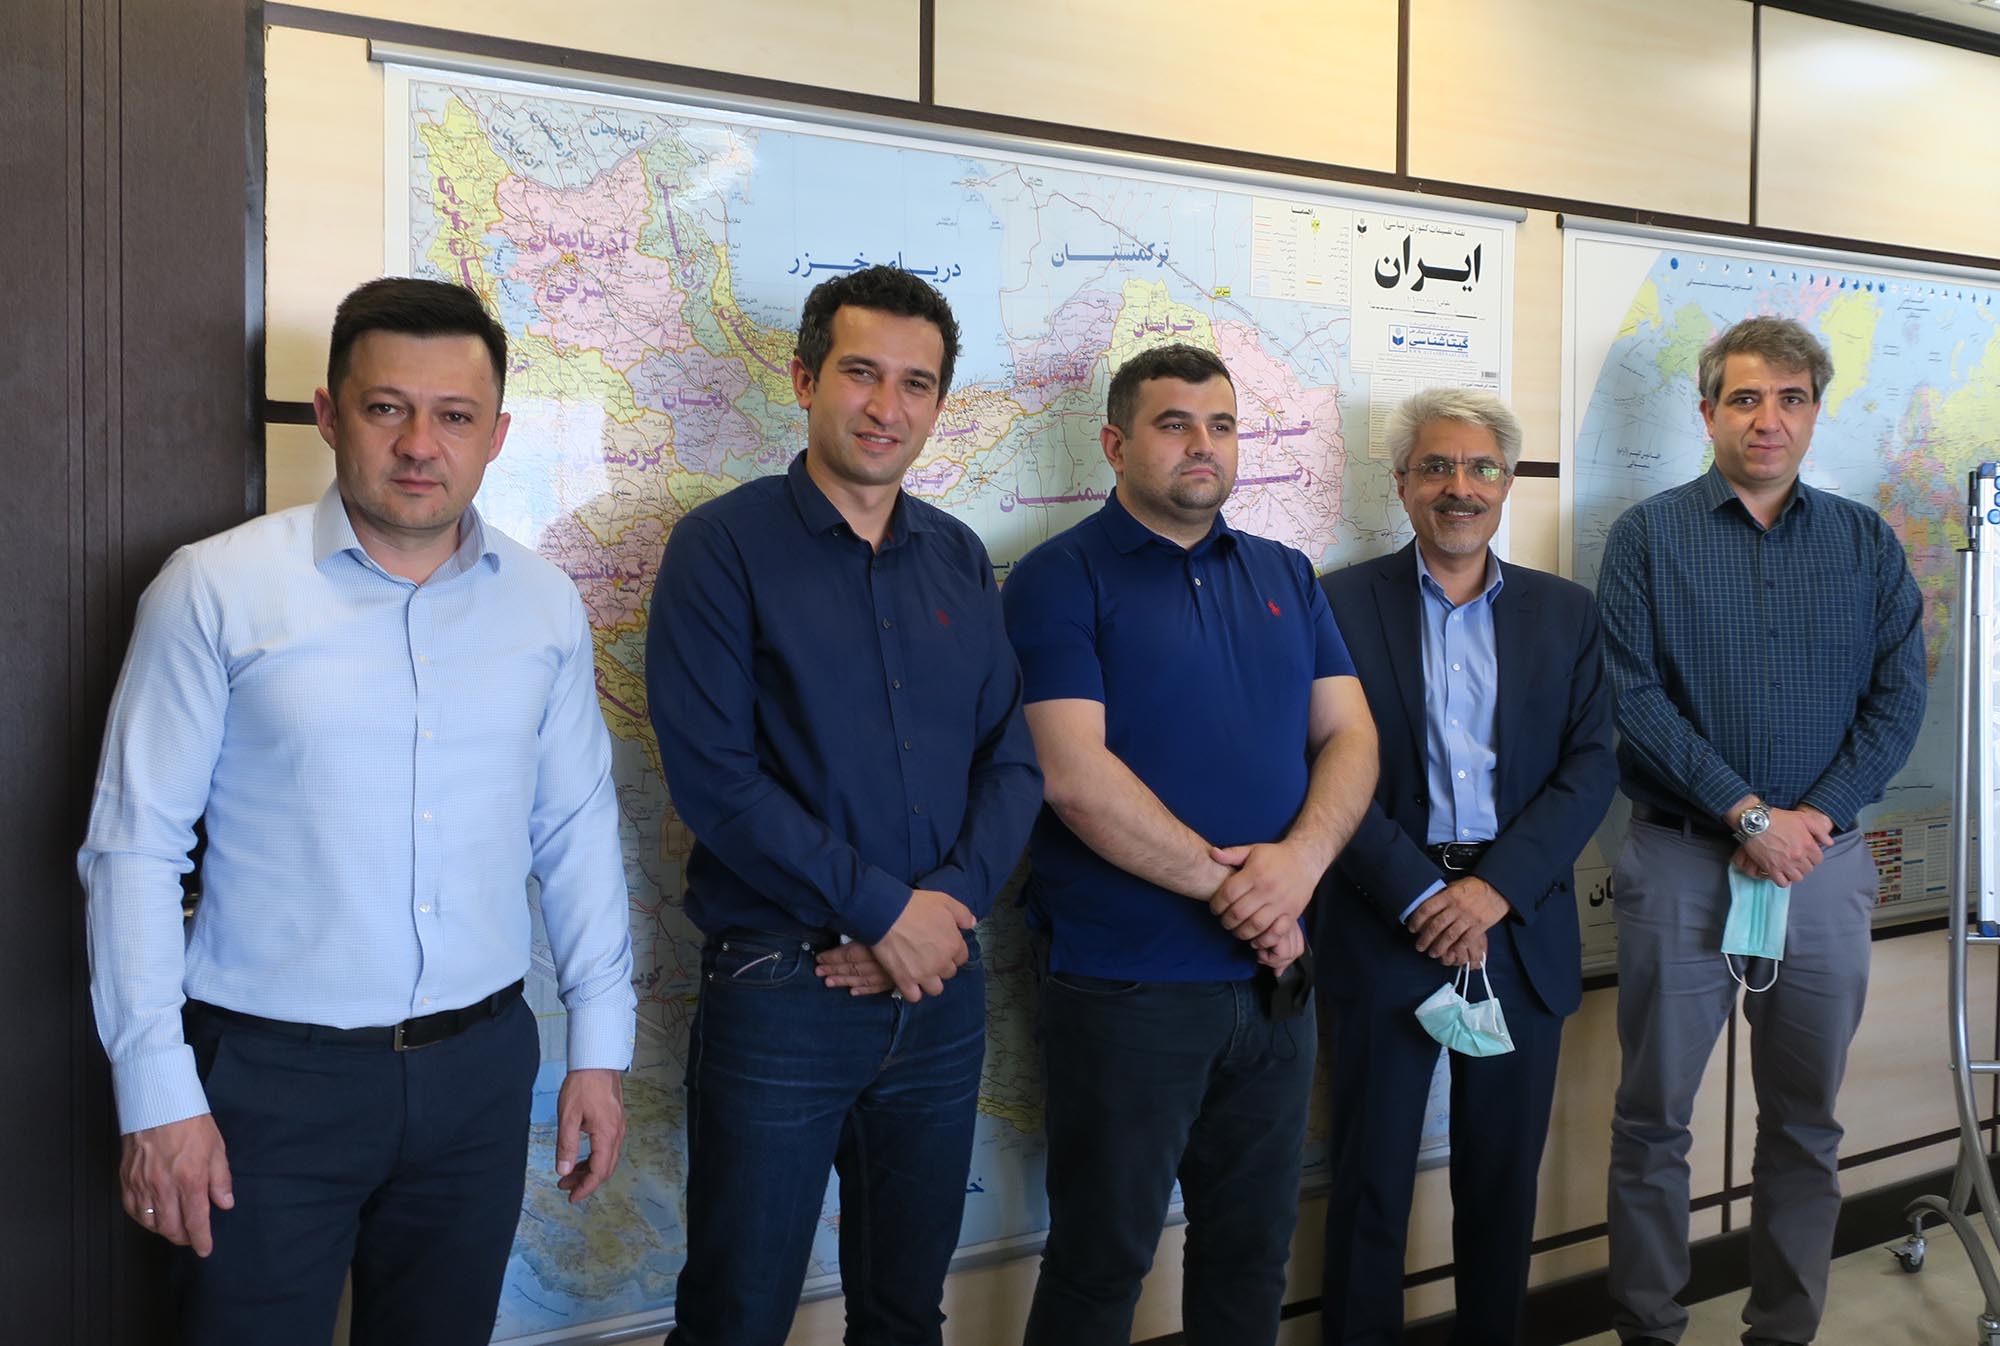 CASA 1000 Representatives from Tajikistan Visited Monenco Iran